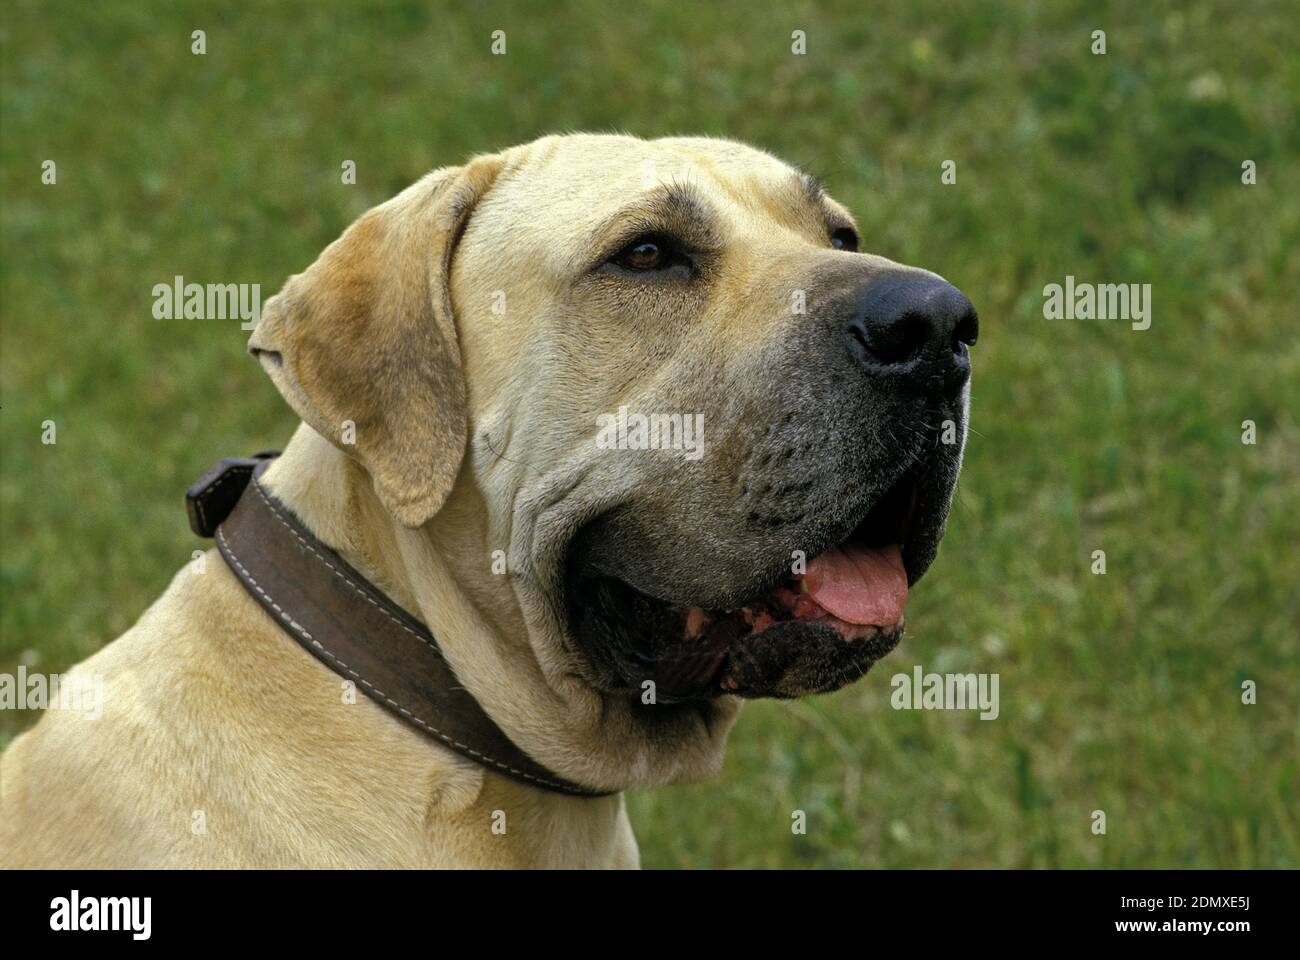 Dog breed fila brasileiro hi-res stock photography and images - Alamy